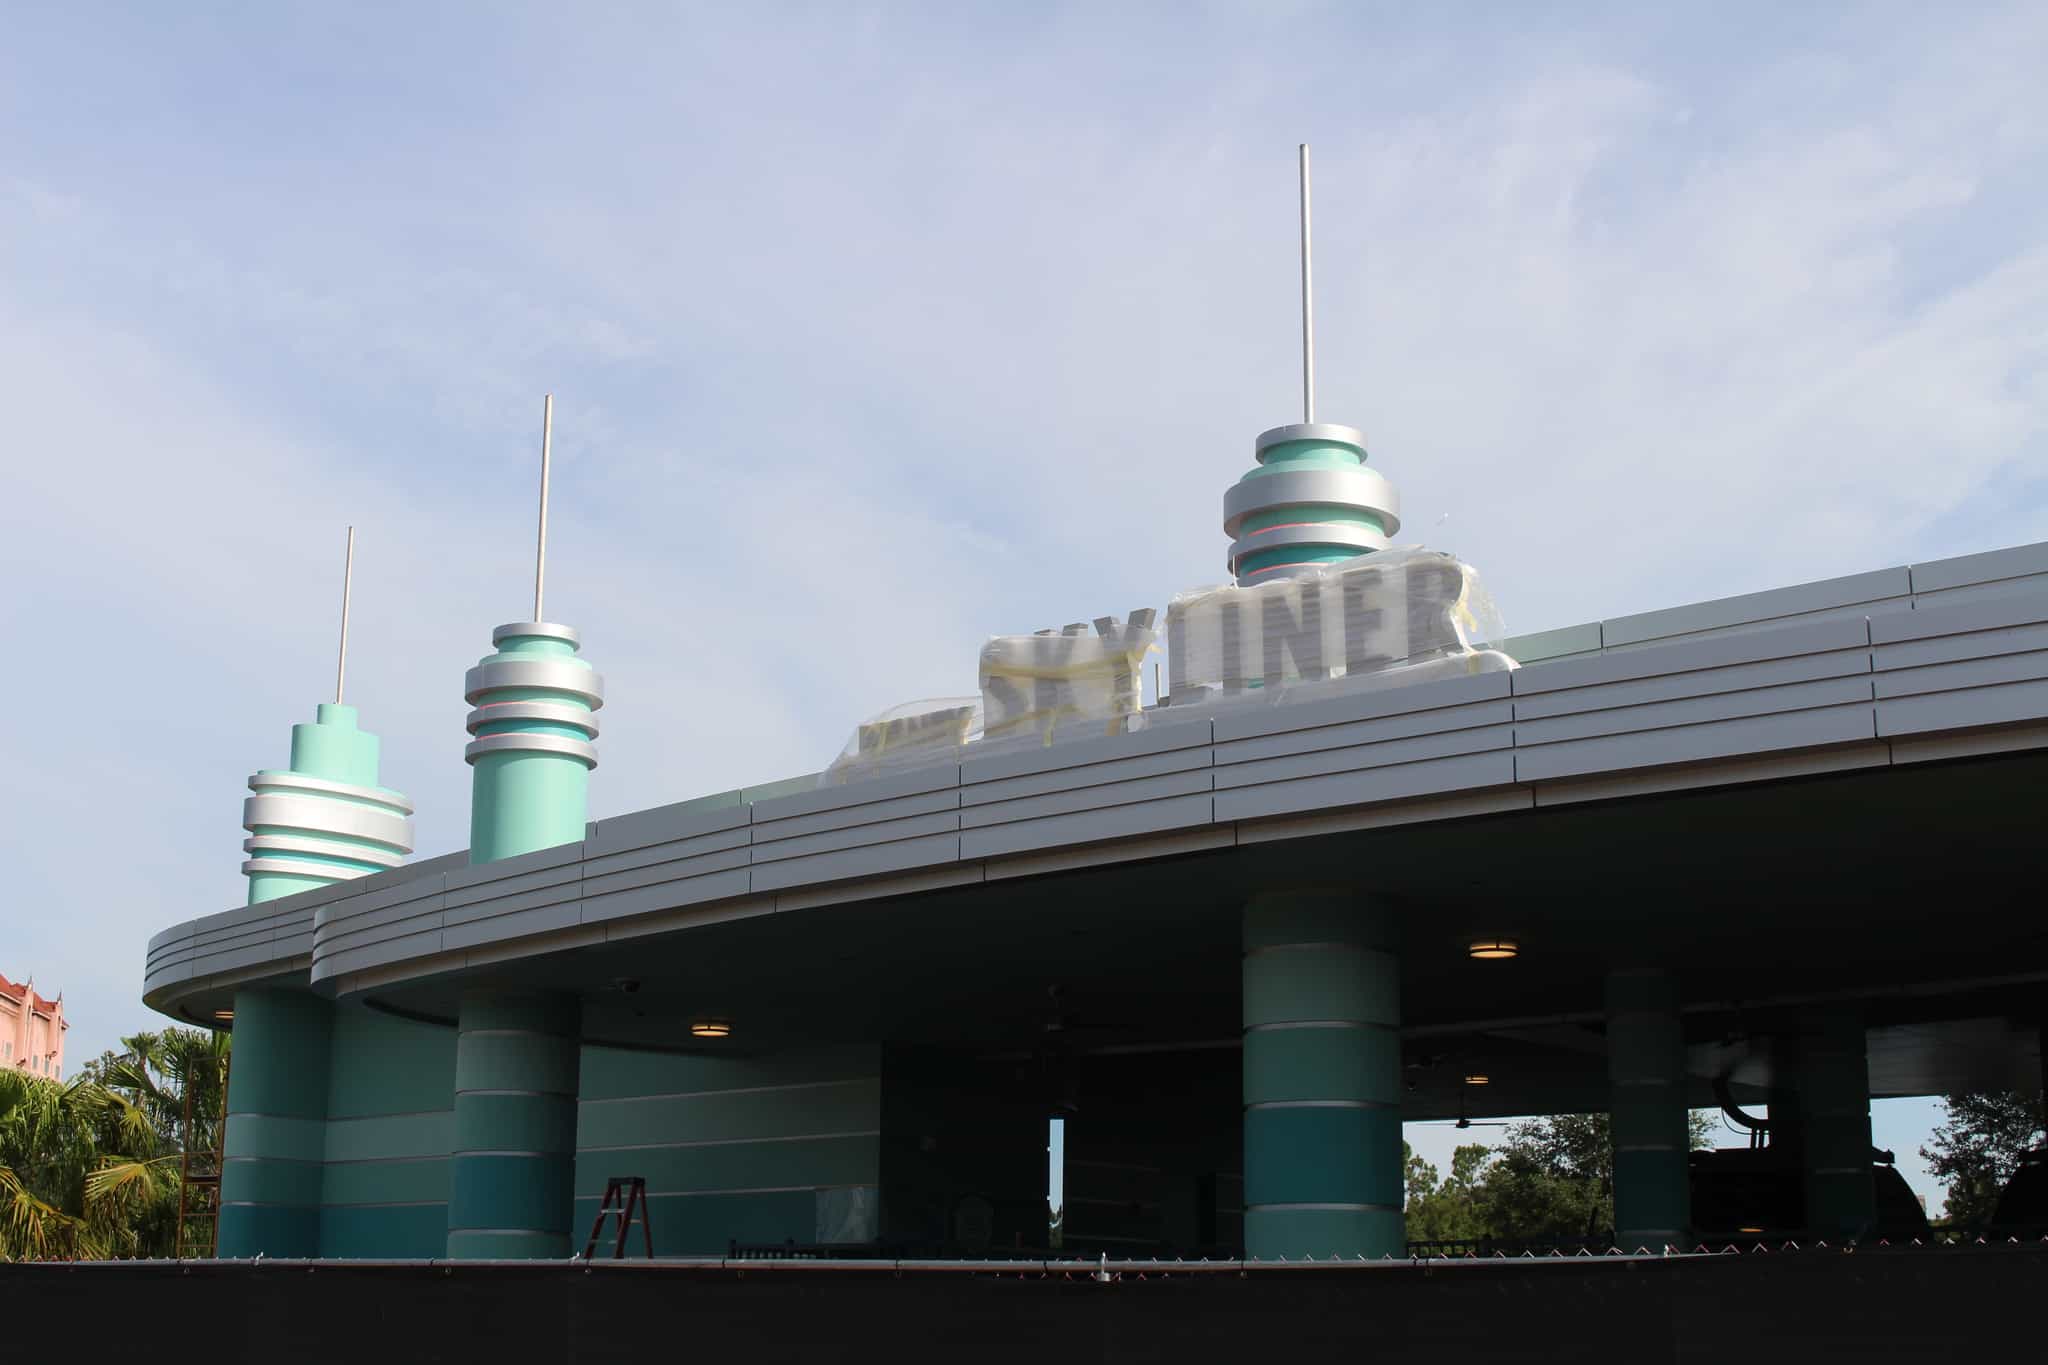 Hollywood Studios skyliner